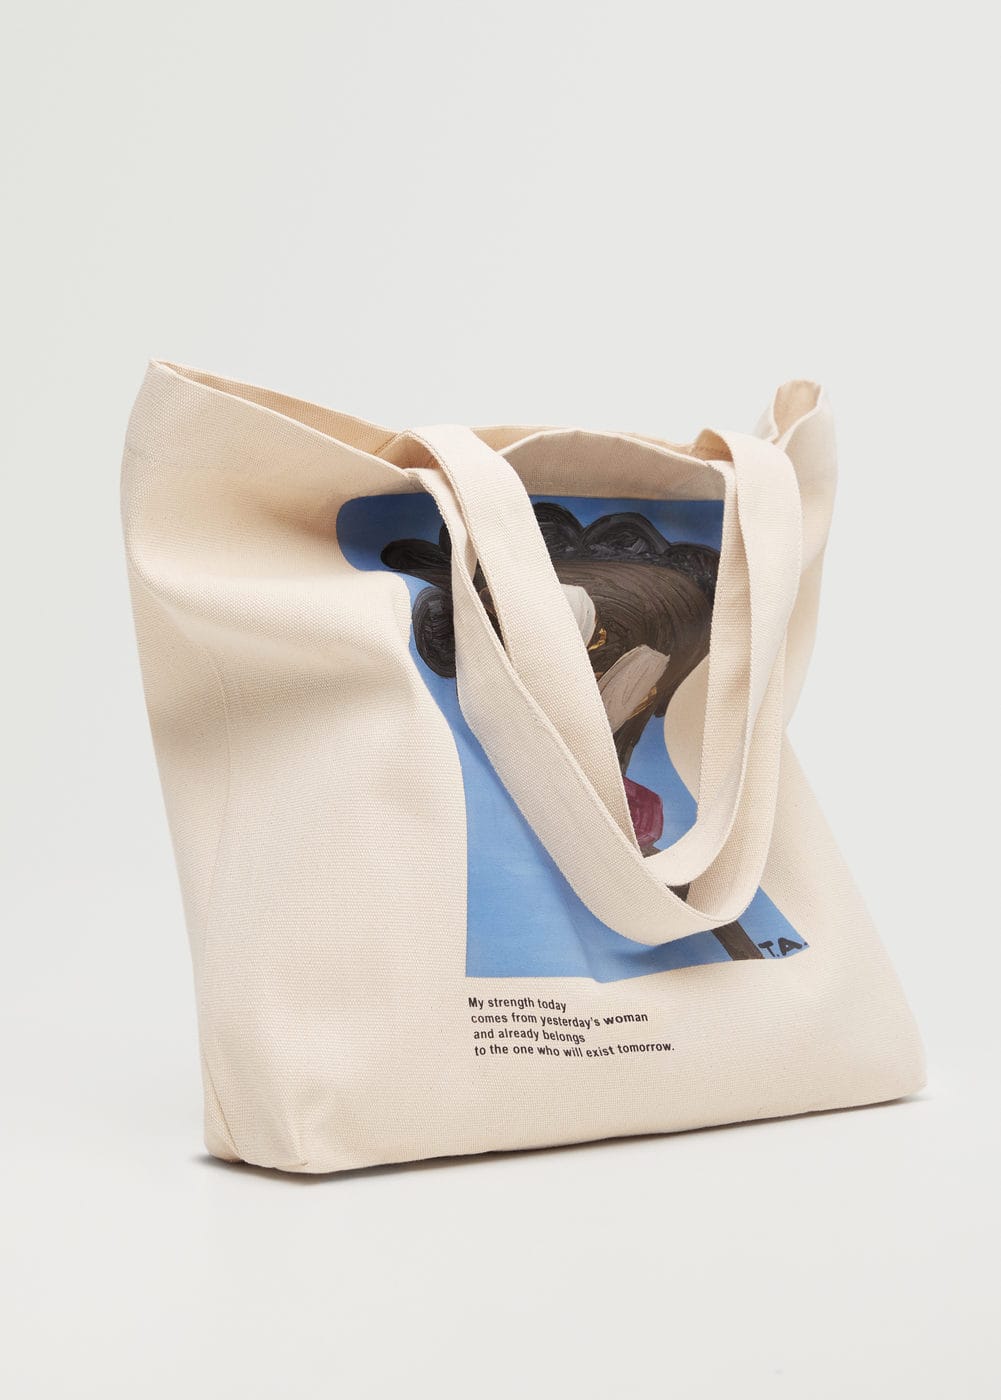 11 of The Best Designer Work Bags with Video - Handbagholic